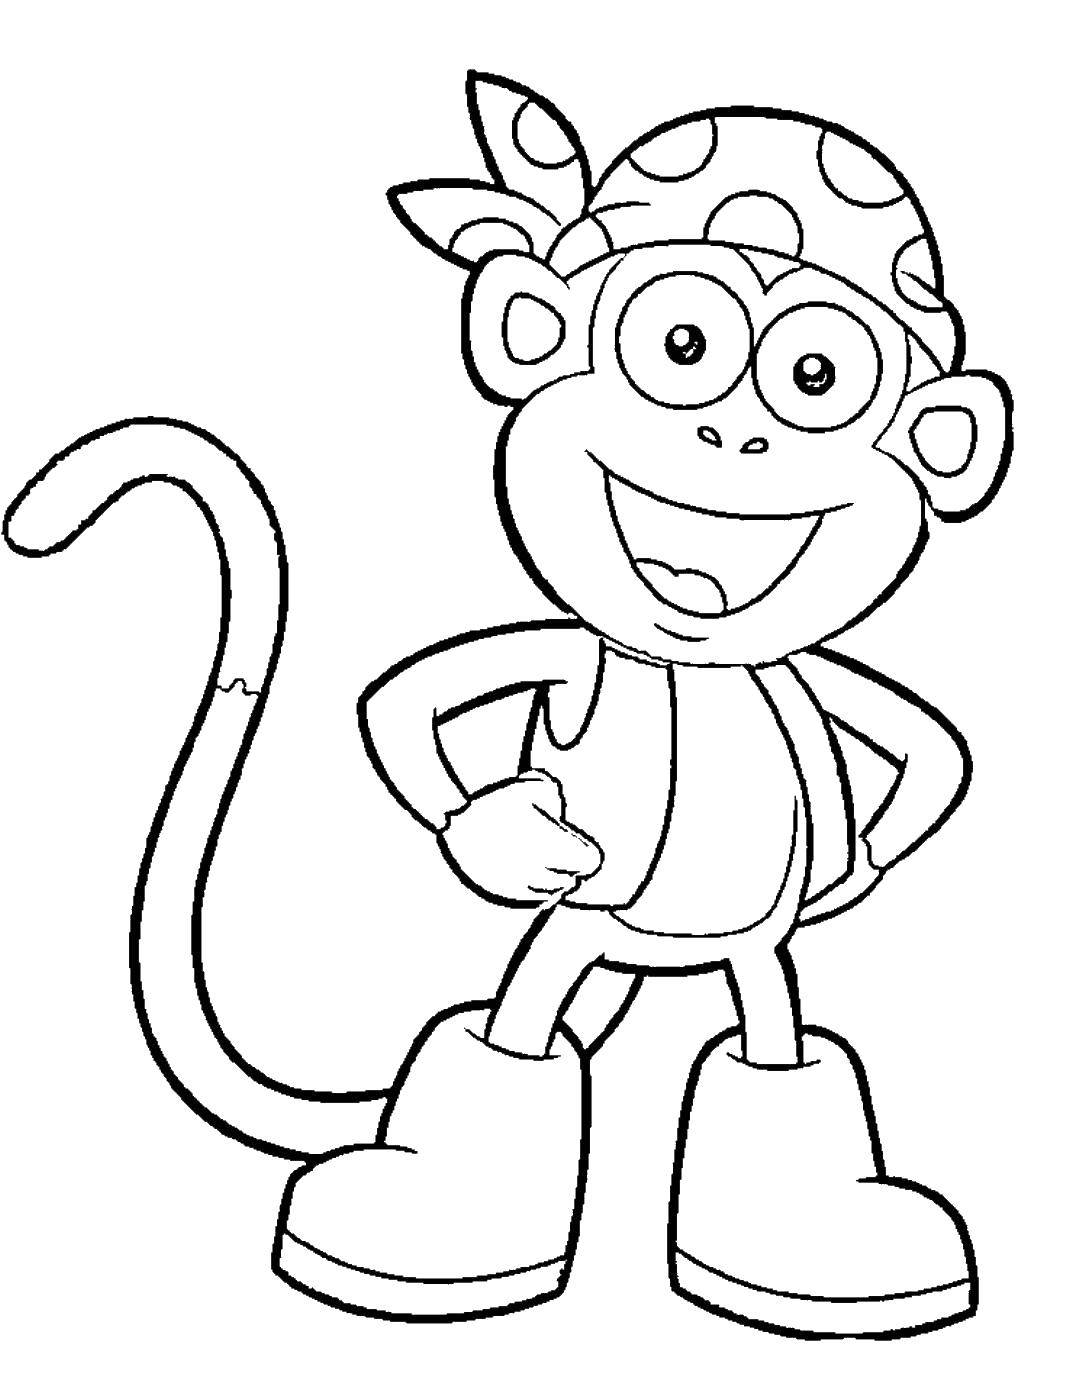 Coloring Slipper. Category cartoons. Tags:  Cartoon character, Dora the Explorer, Dora, Boots.